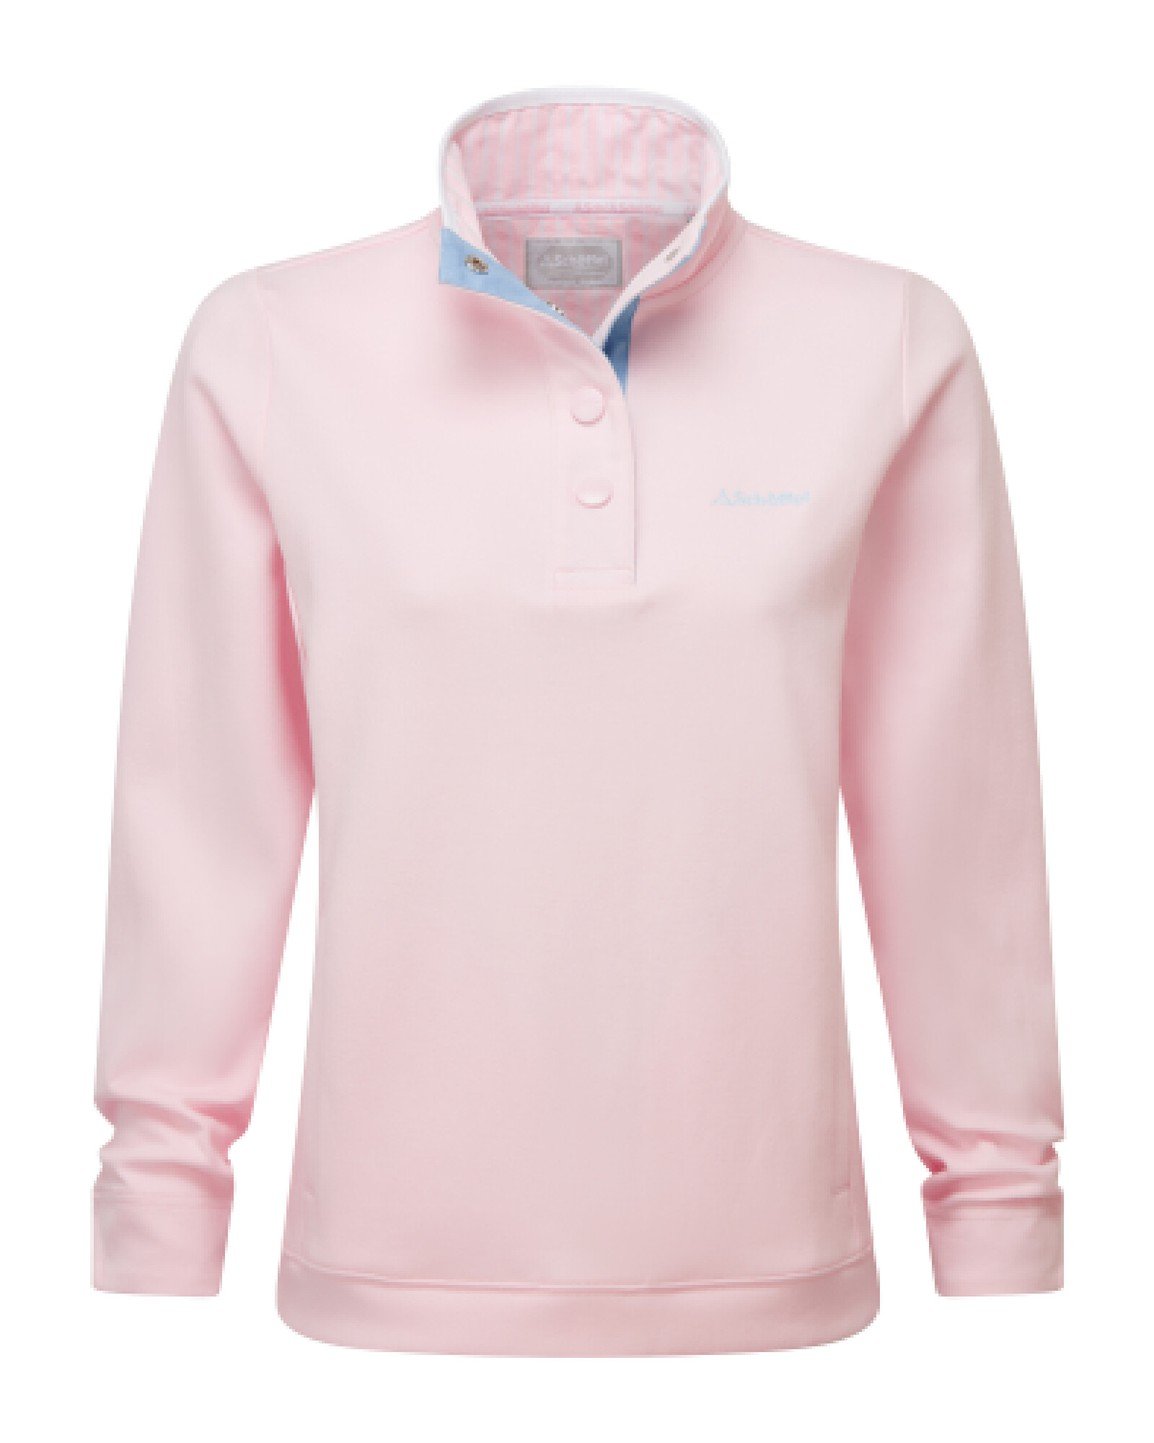 Steephill Cove Sweatshirt Pale Pink